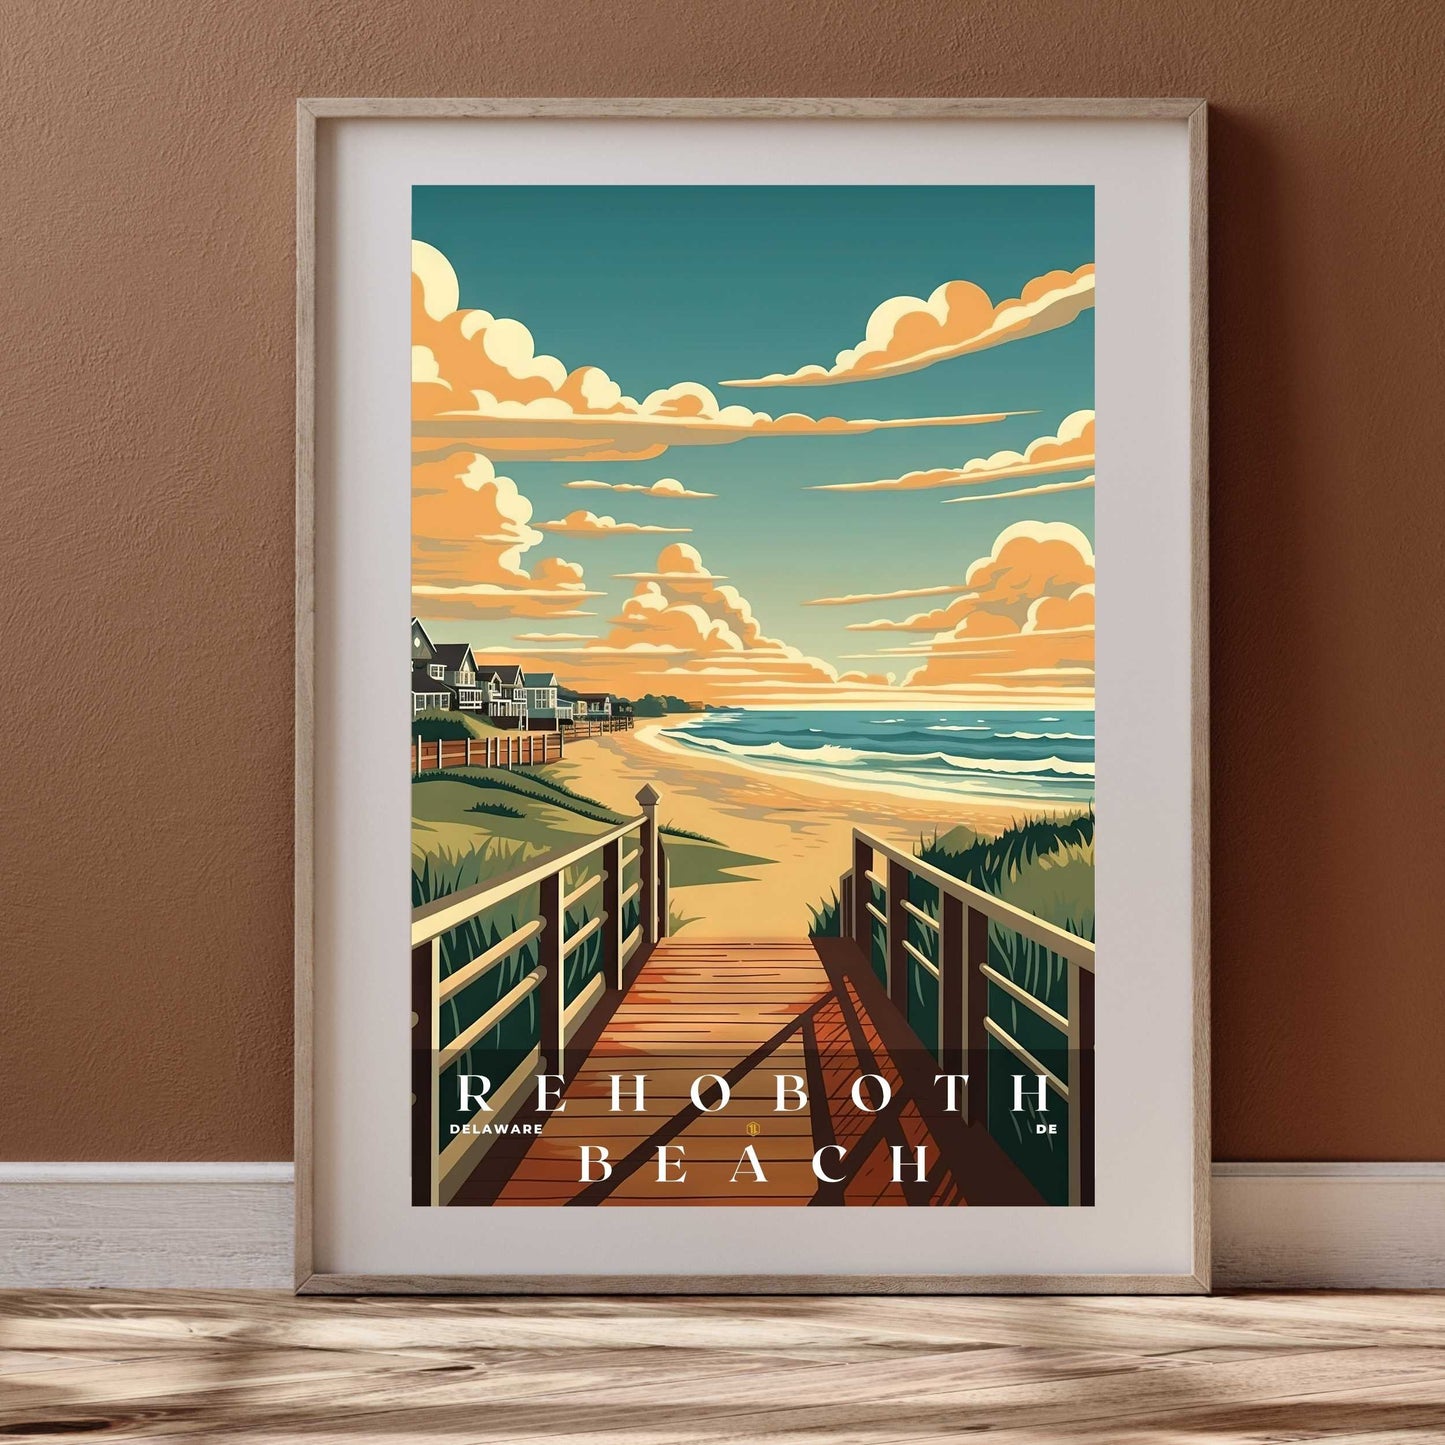 Rehoboth Beach Poster | US Travel | S01